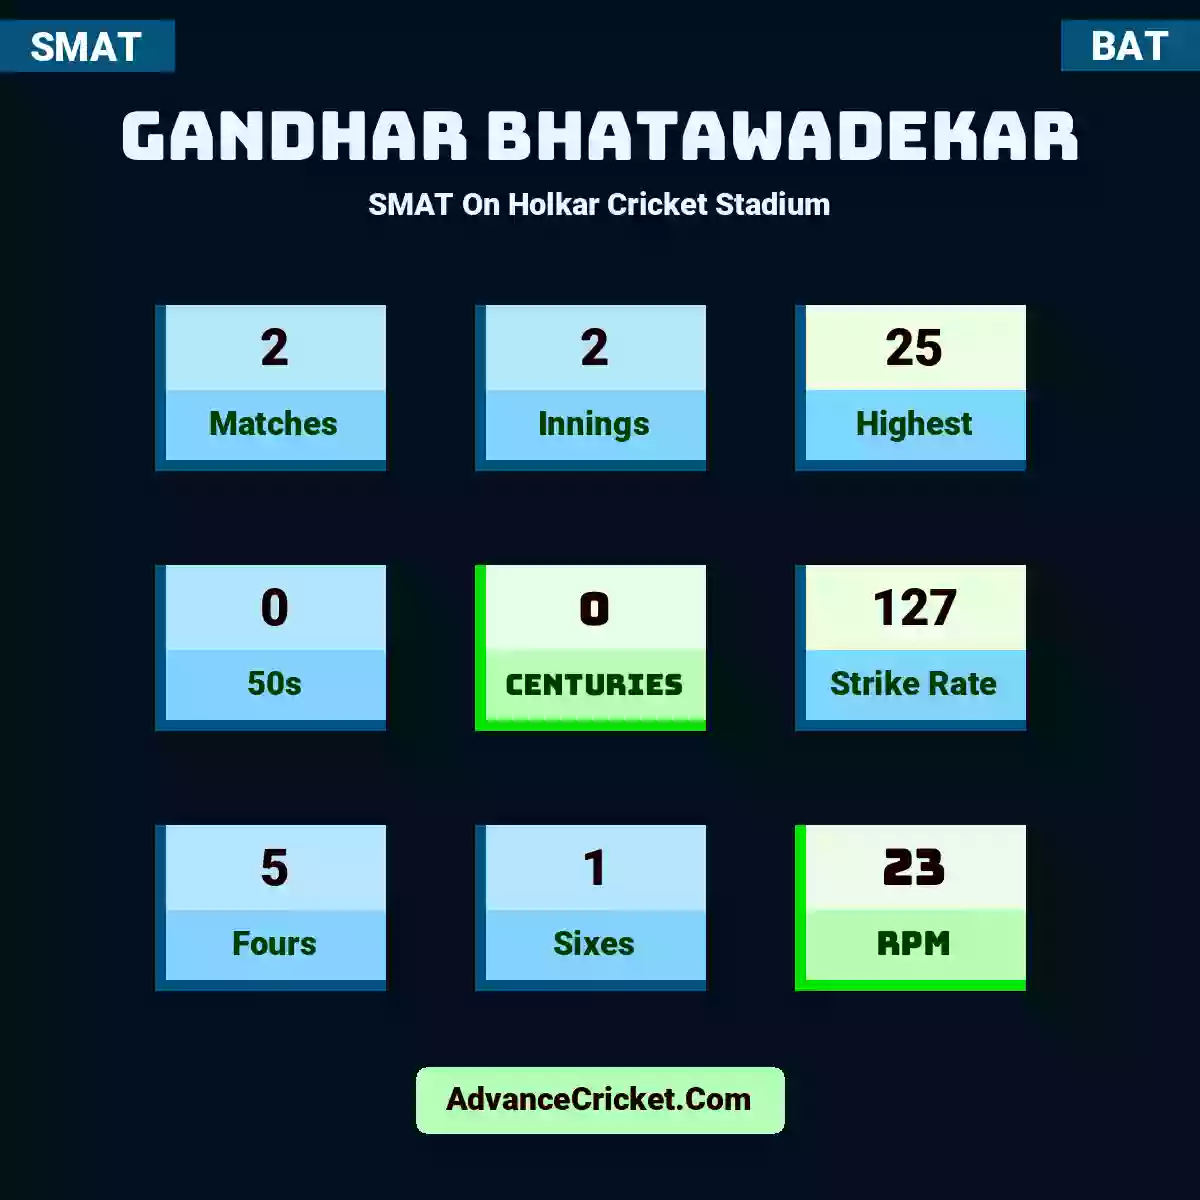 Gandhar Bhatawadekar SMAT  On Holkar Cricket Stadium, Gandhar Bhatawadekar played 2 matches, scored 25 runs as highest, 0 half-centuries, and 0 centuries, with a strike rate of 127. G.Bhatawadekar hit 5 fours and 1 sixes, with an RPM of 23.